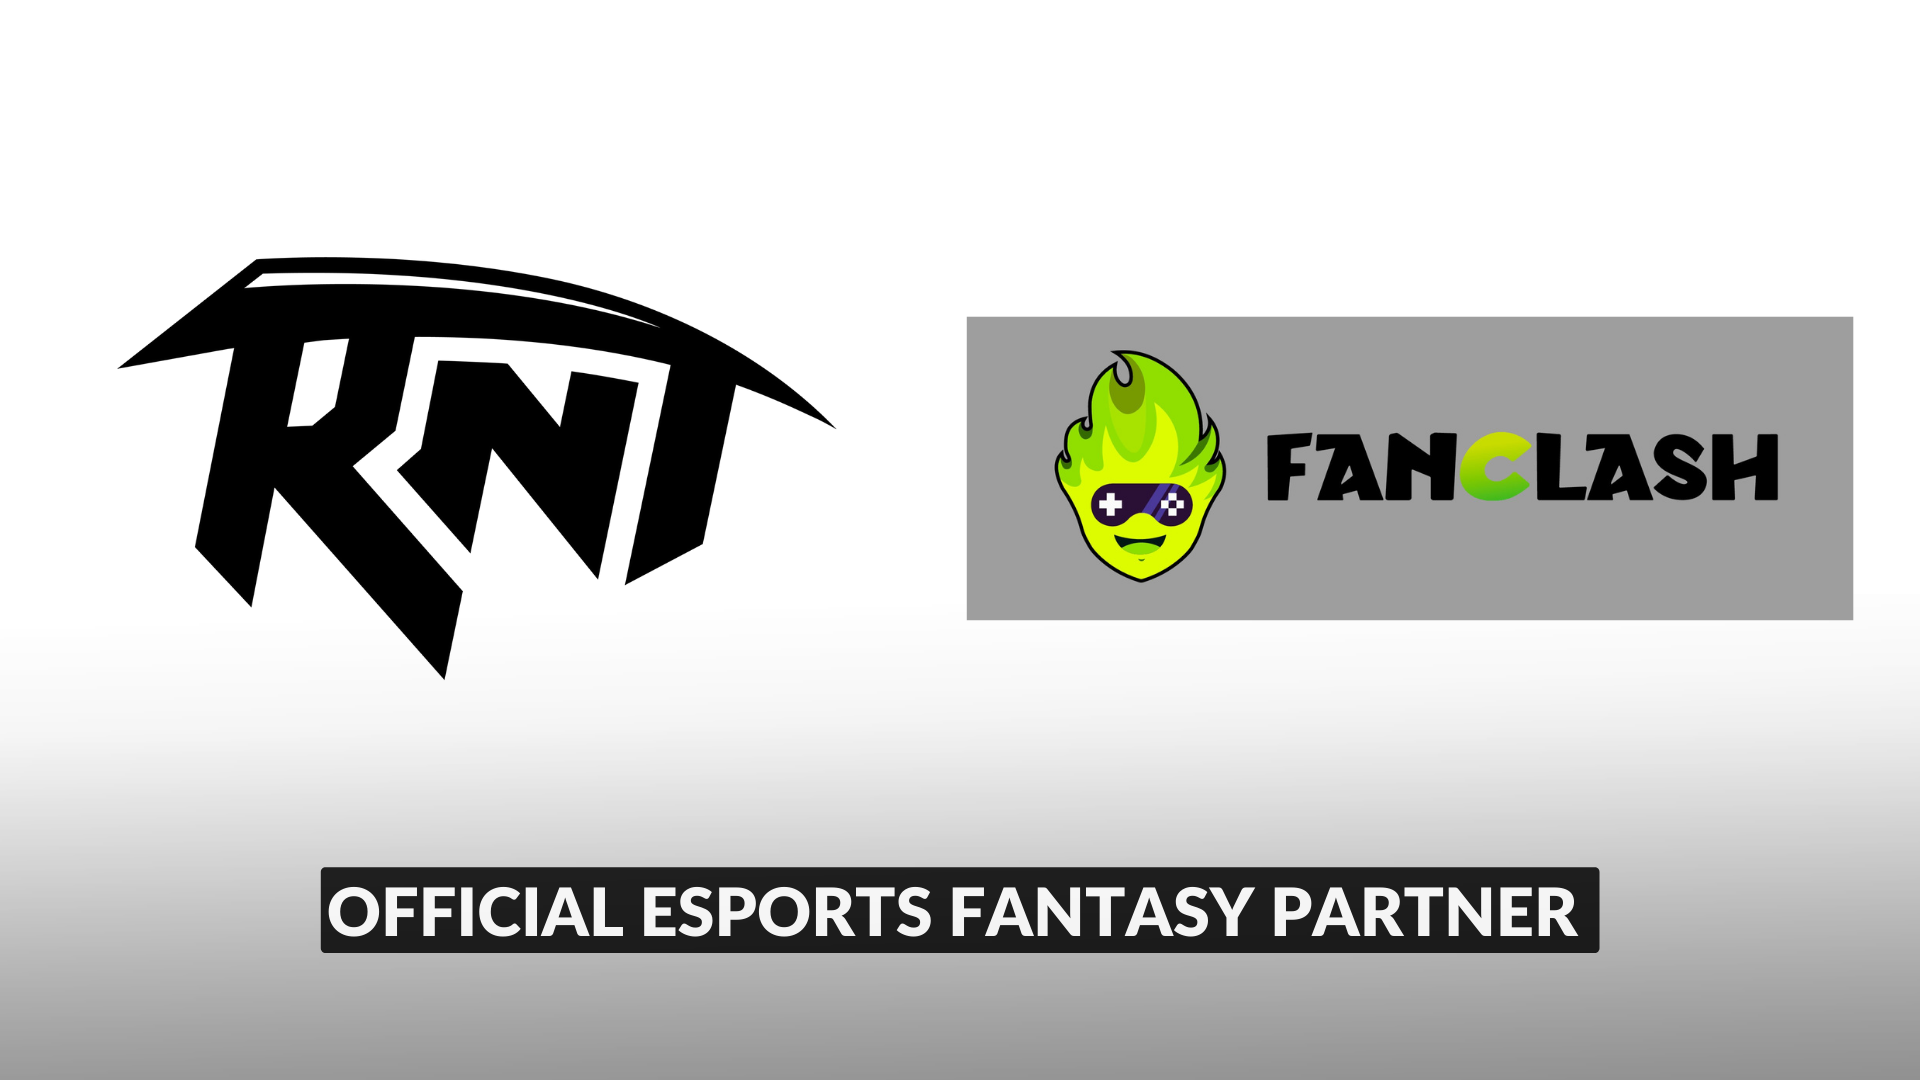 Revenant Esports names FanClash as Esports Fantasy Partner